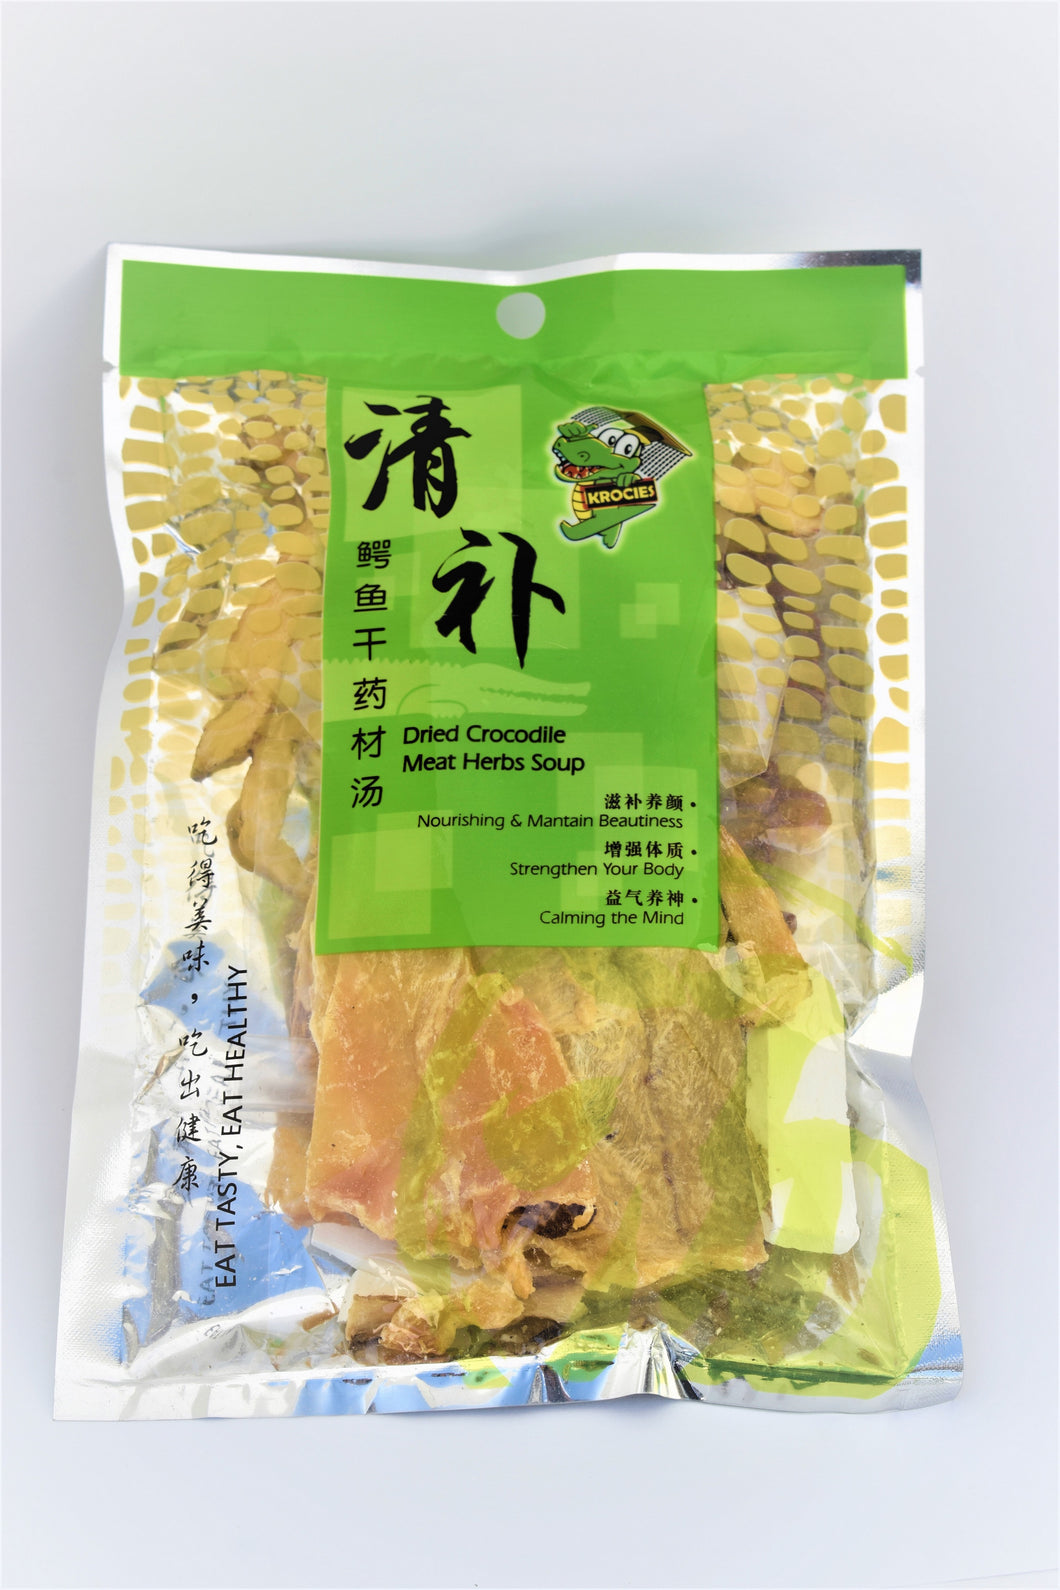 Qing Bu Dried Crocodile Meat Herbs Soup - Keep your family healthy